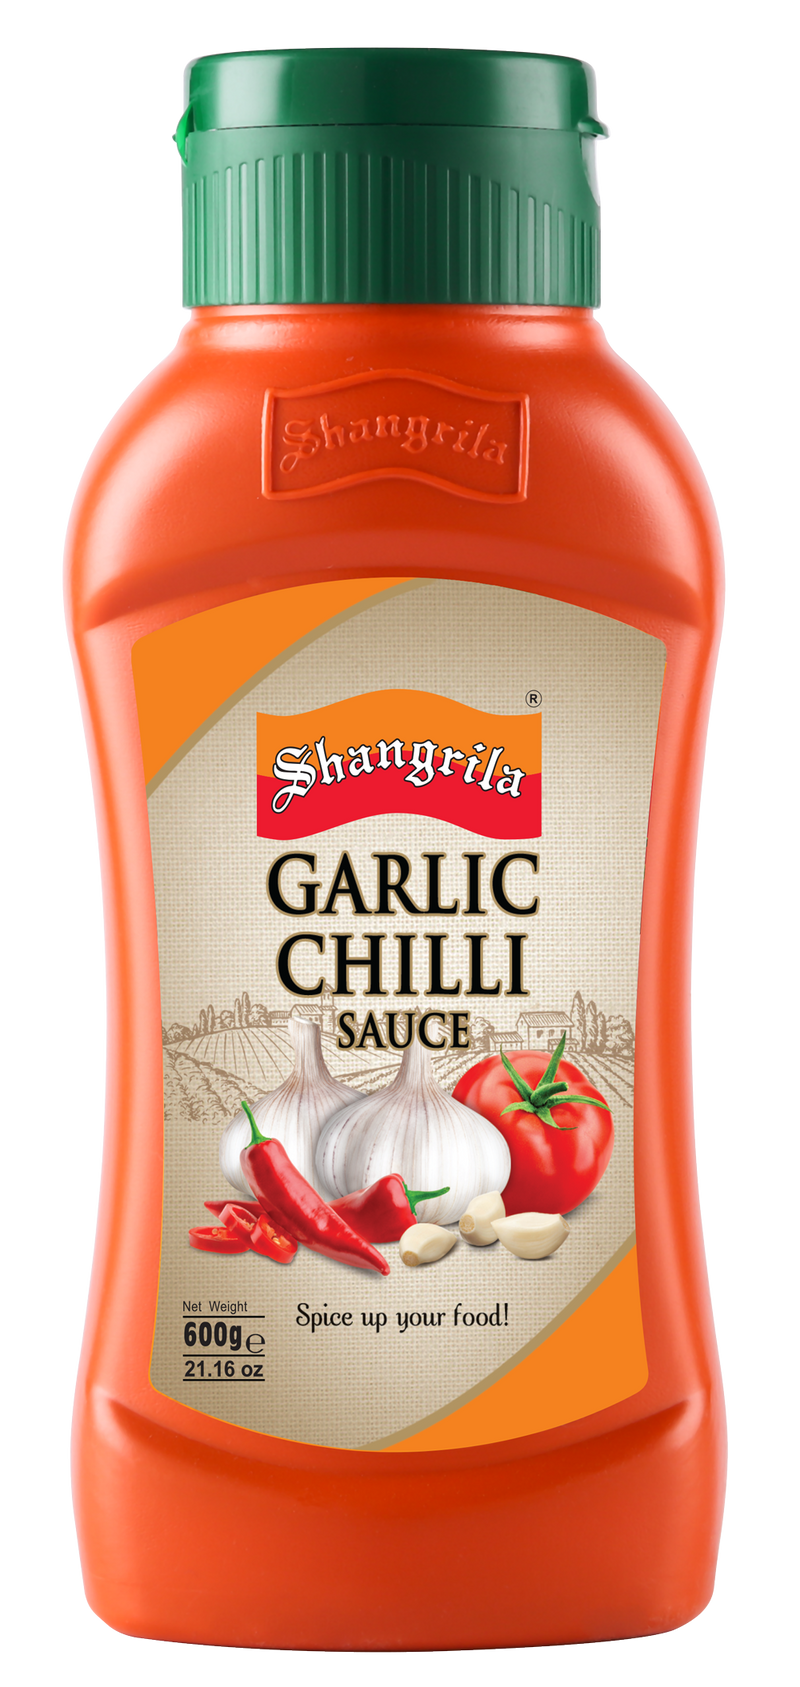 Shangrila Garlic Chilli Sauce 600gm Bottle